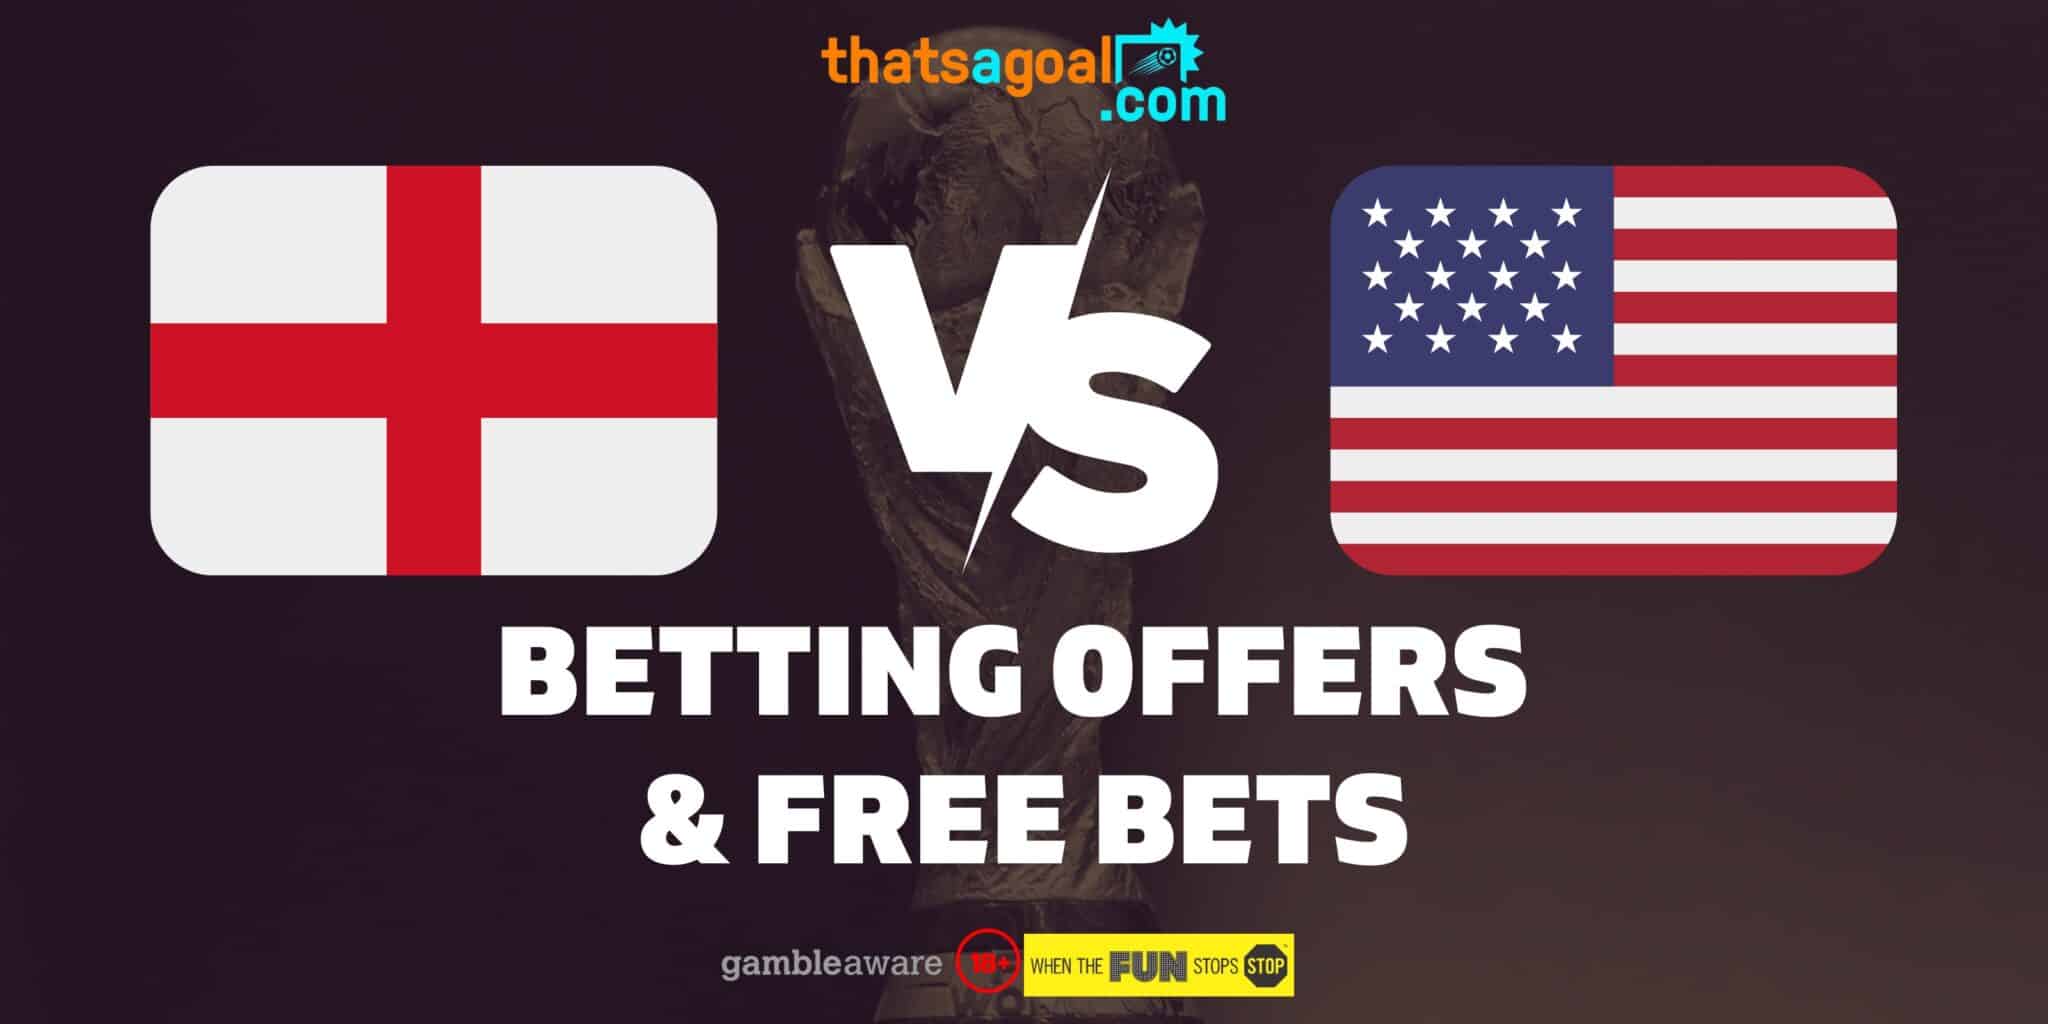 England vs usa betting offers